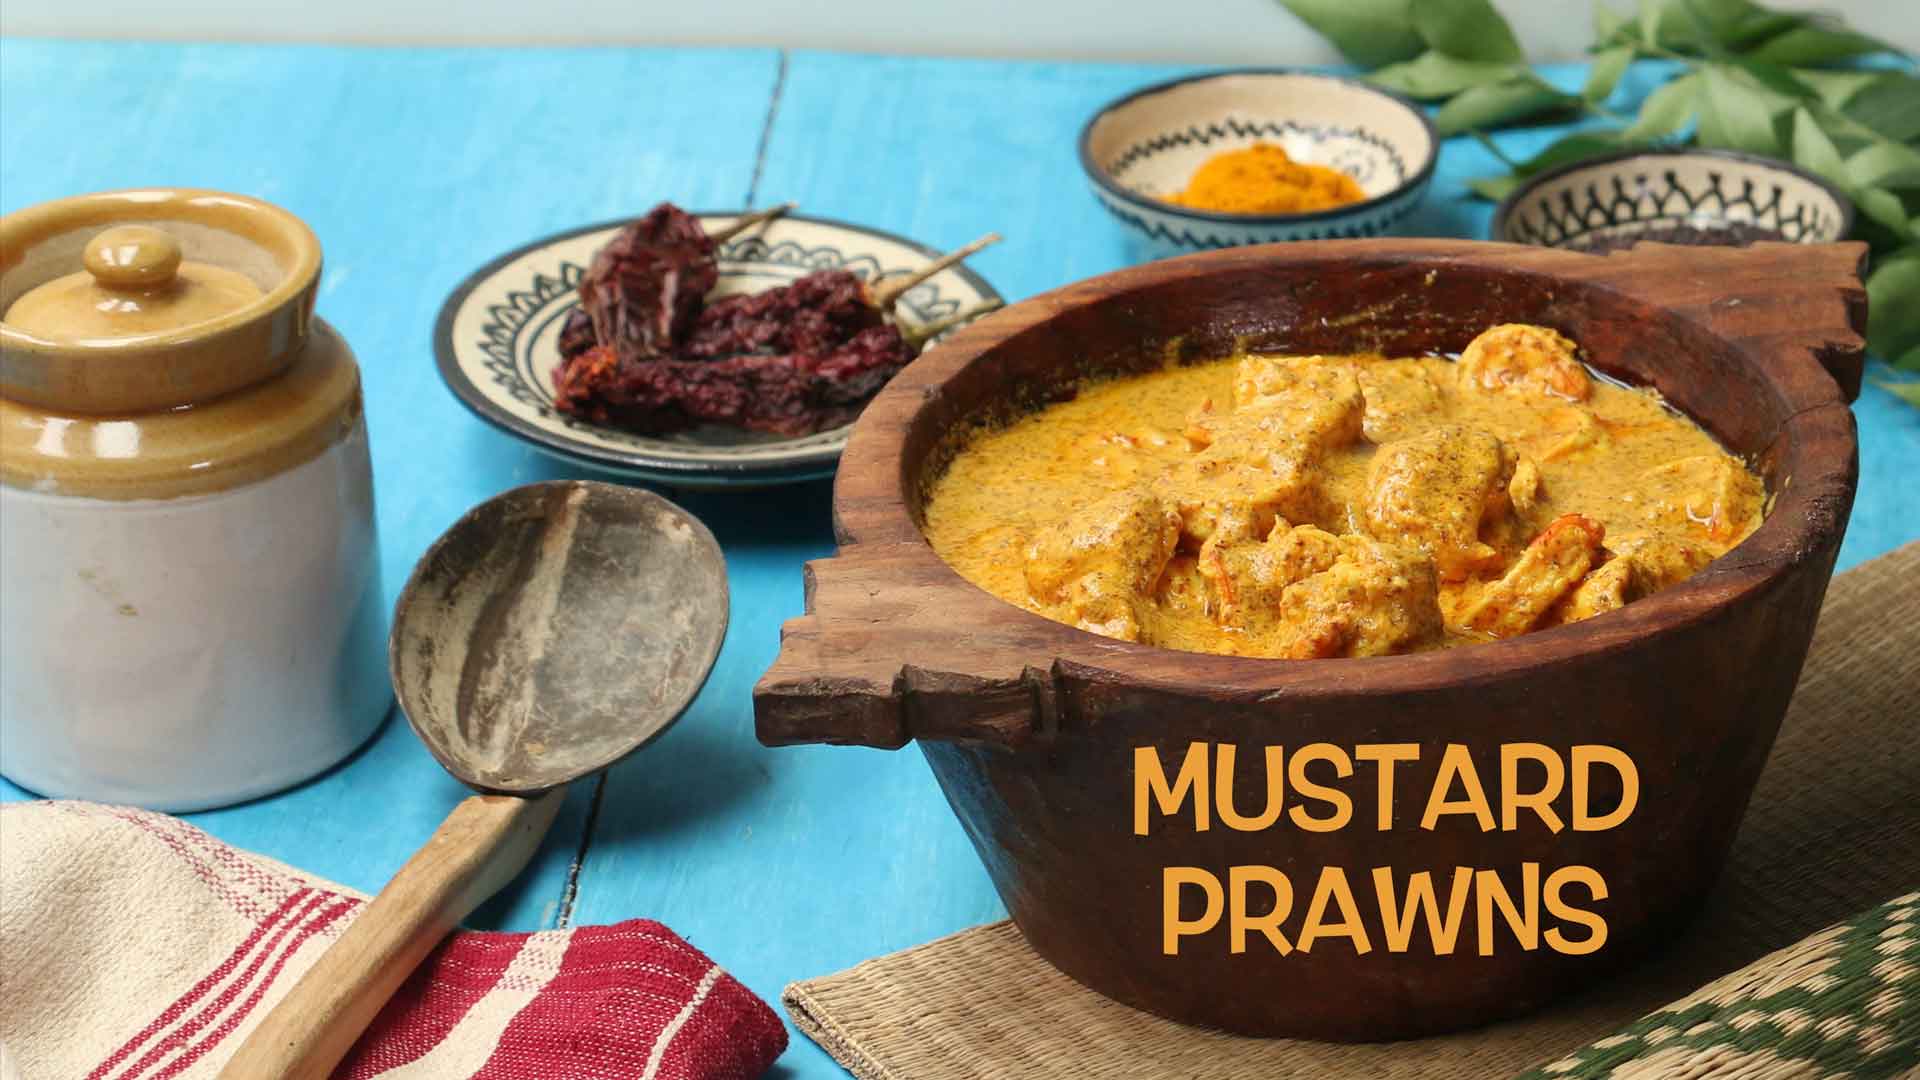 Mustard Prawns Recipe | How to Make Quick and Easy Mustard Prawns